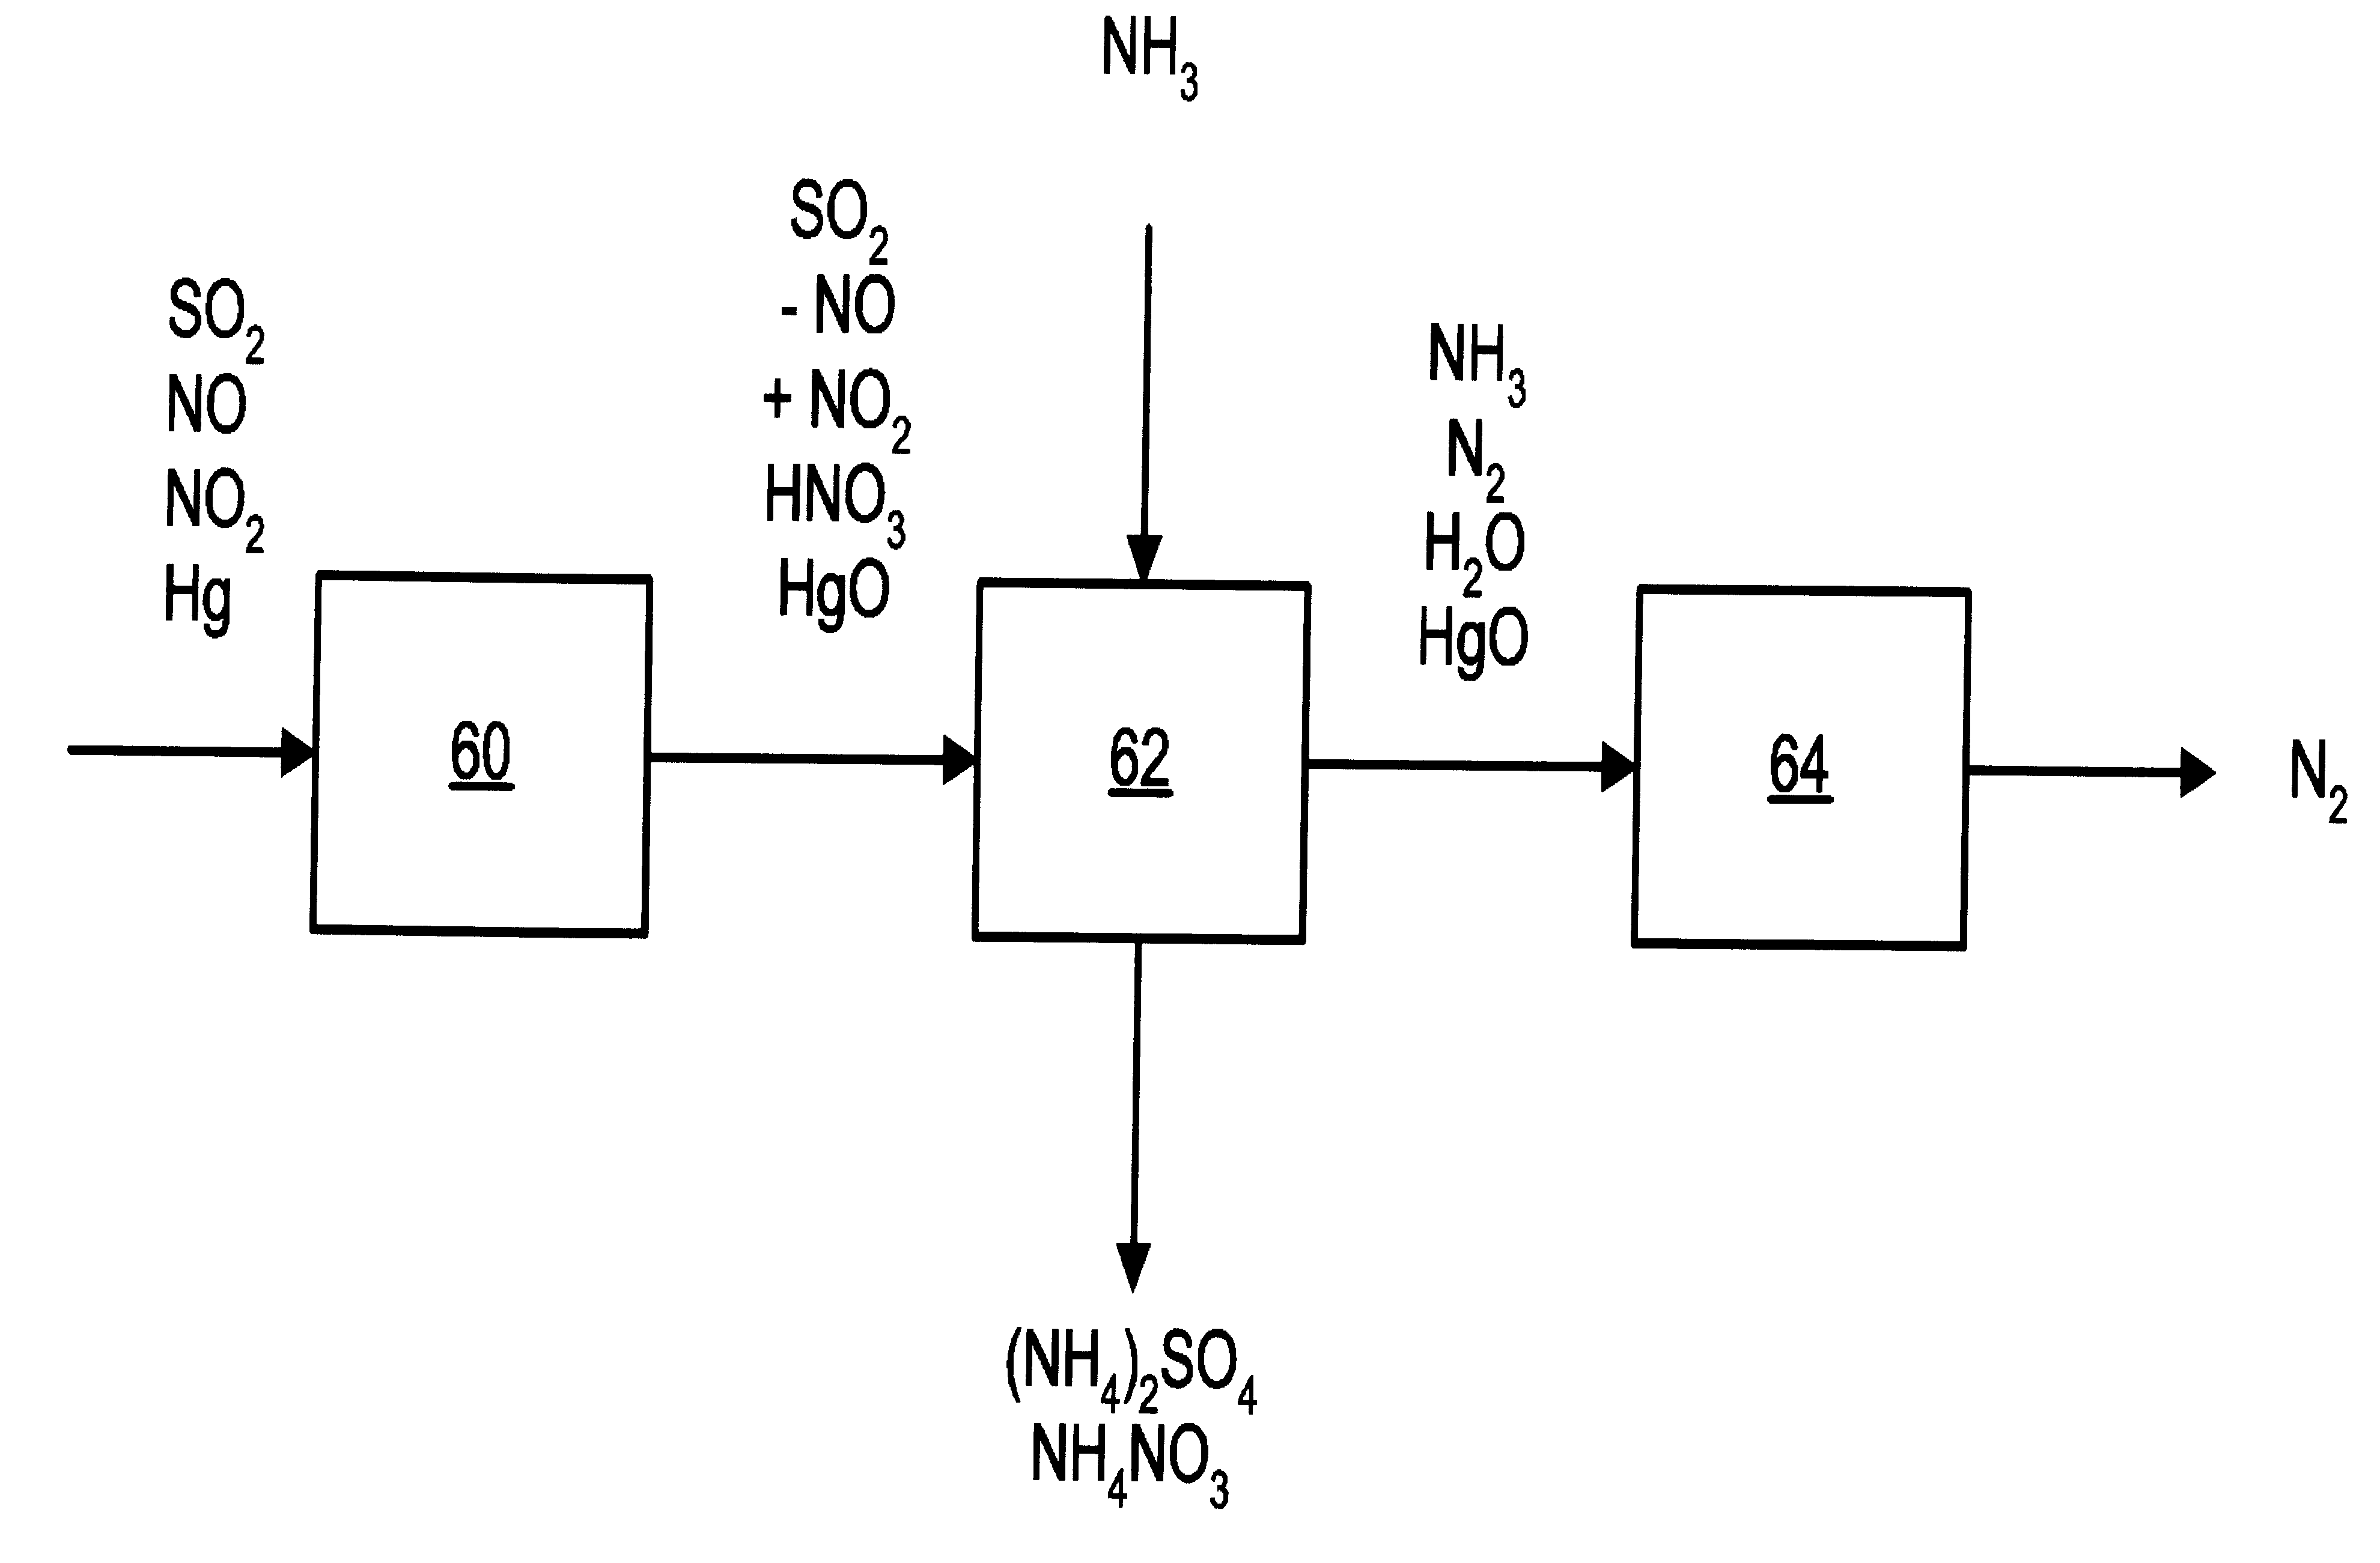 NOx, Hg, and SO2 removal using ammonia